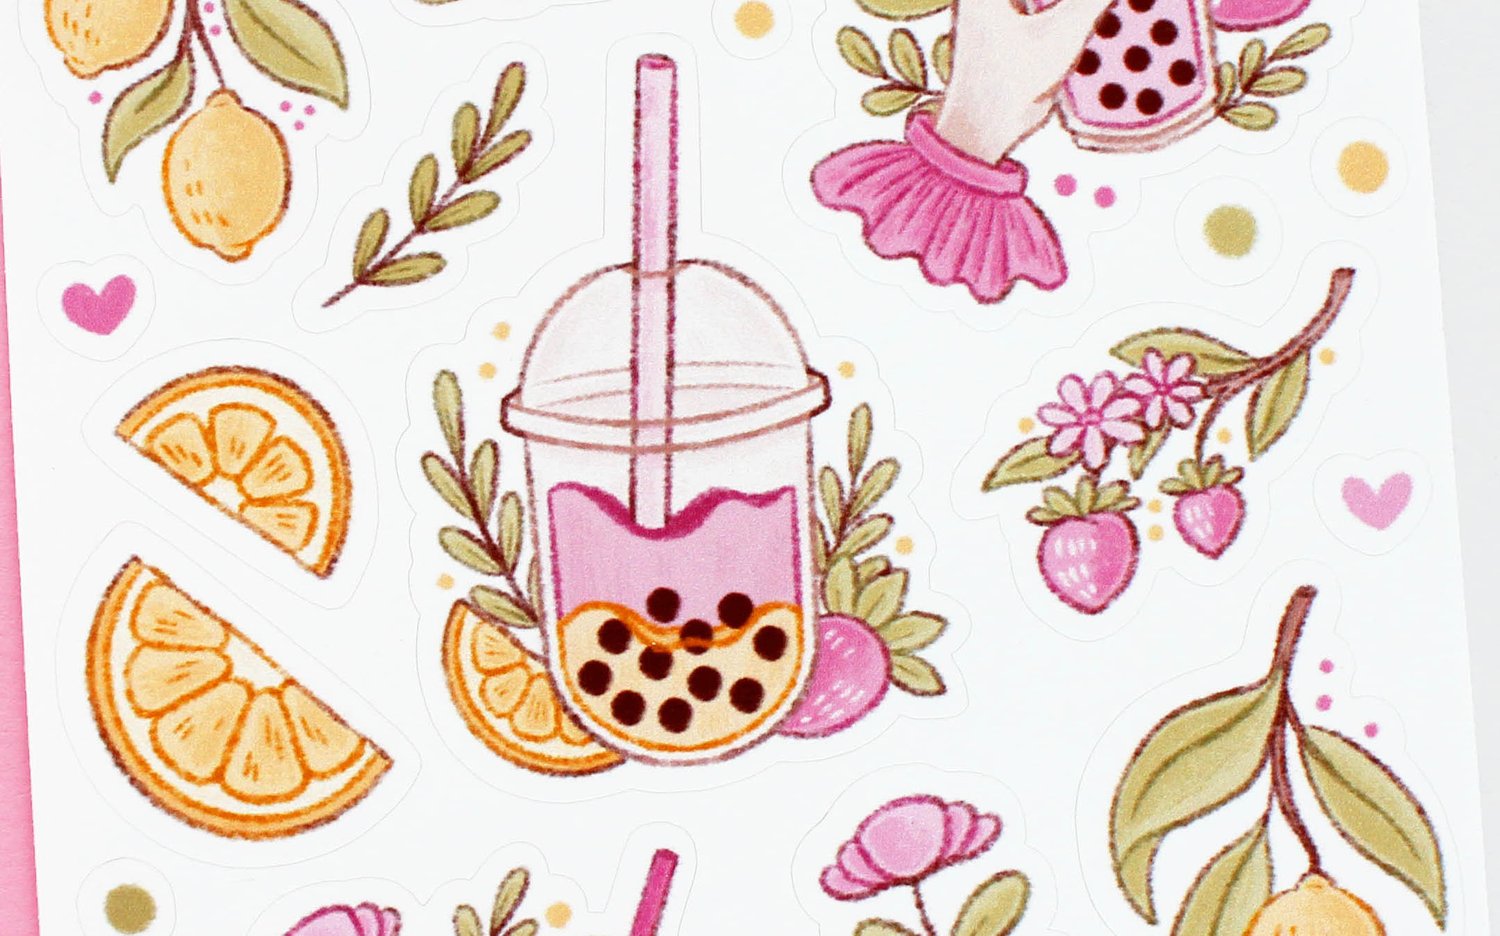 Bubble Tea Sticker Sheet — Marigona Suli